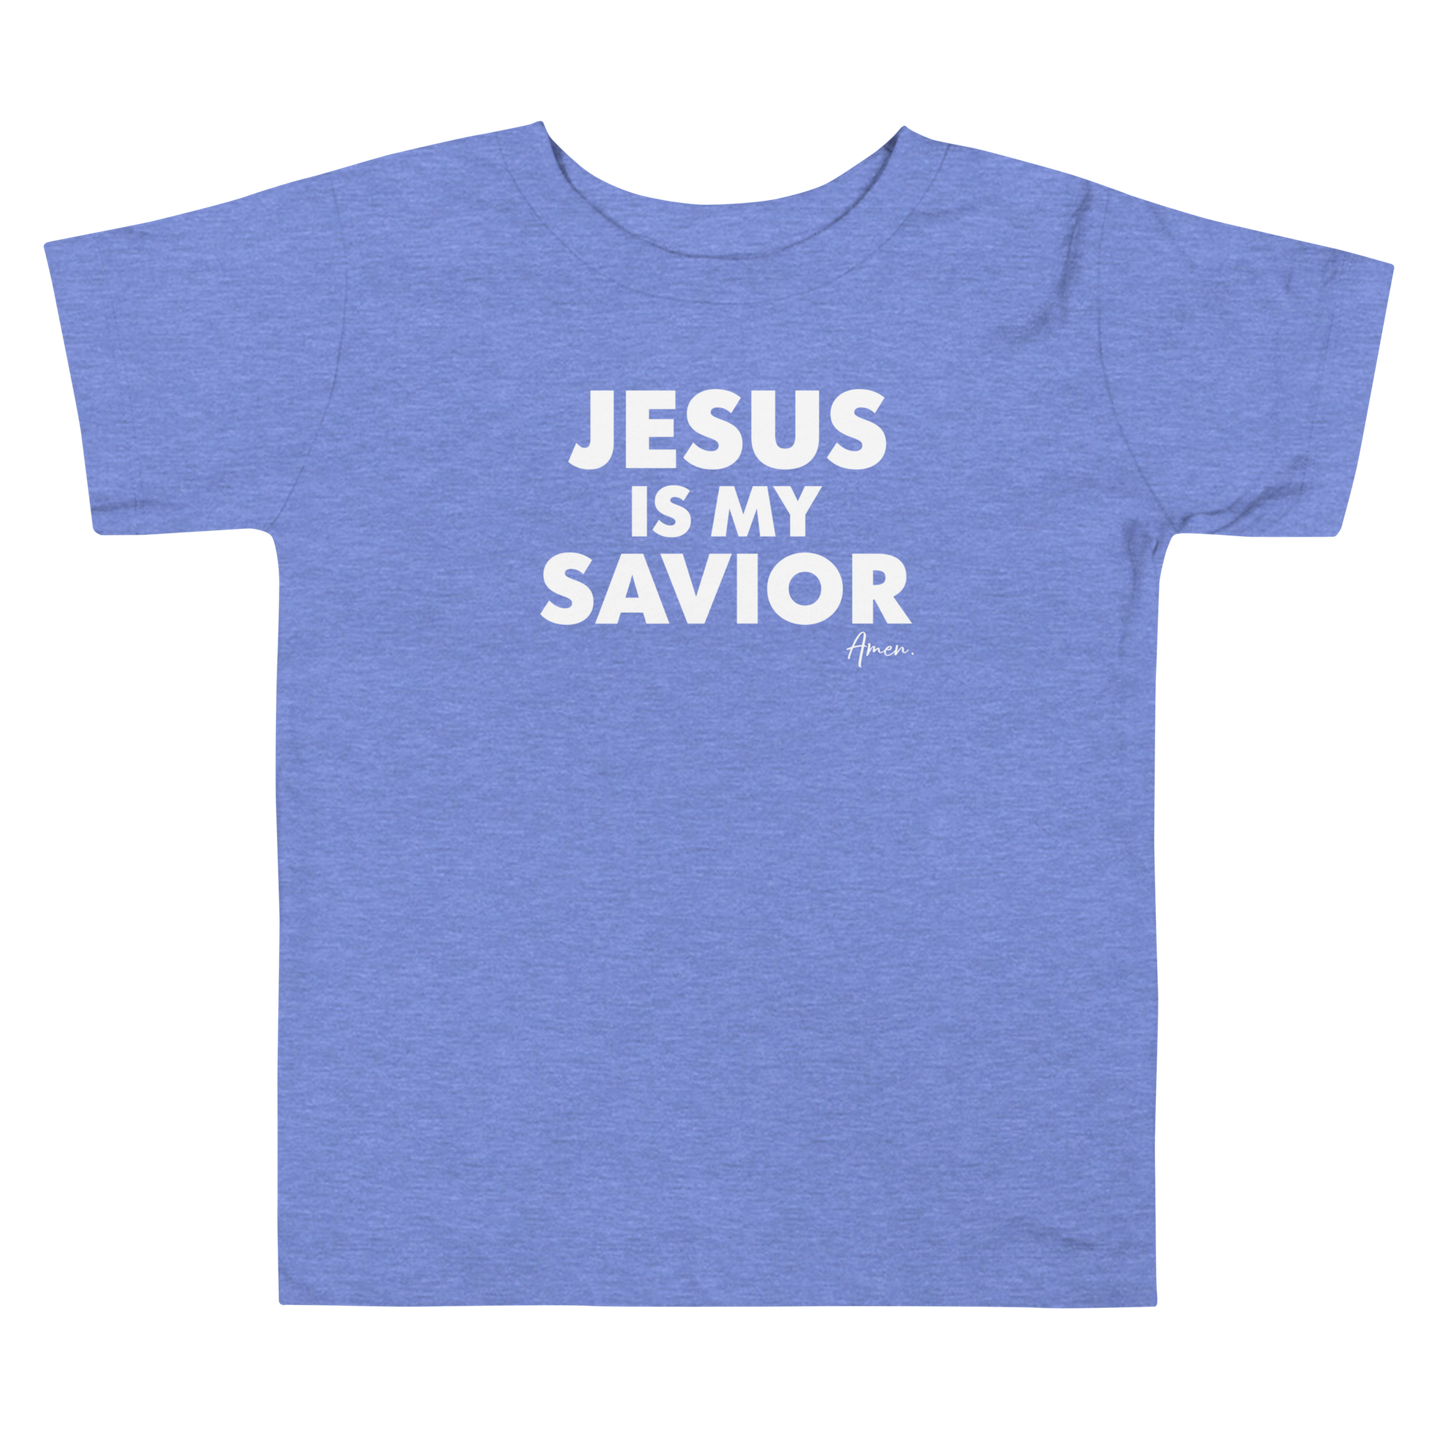 Jesus is my Savior - Toddler Short Sleeve Tee